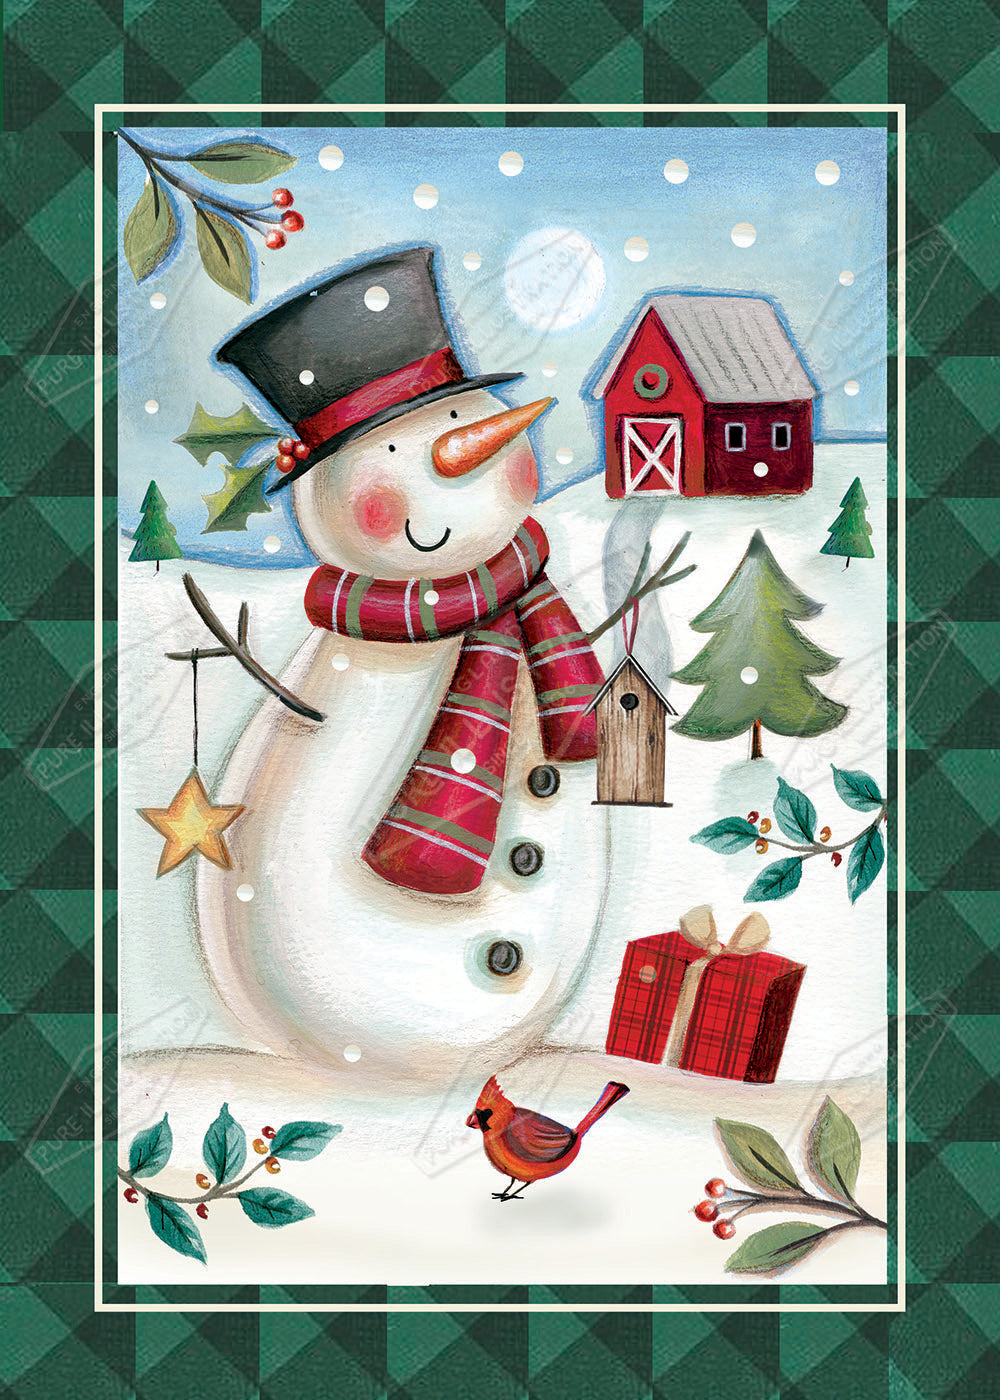 00029450DEV - Deva Evans is represented by Pure Art Licensing Agency - Christmas Greeting Card Design